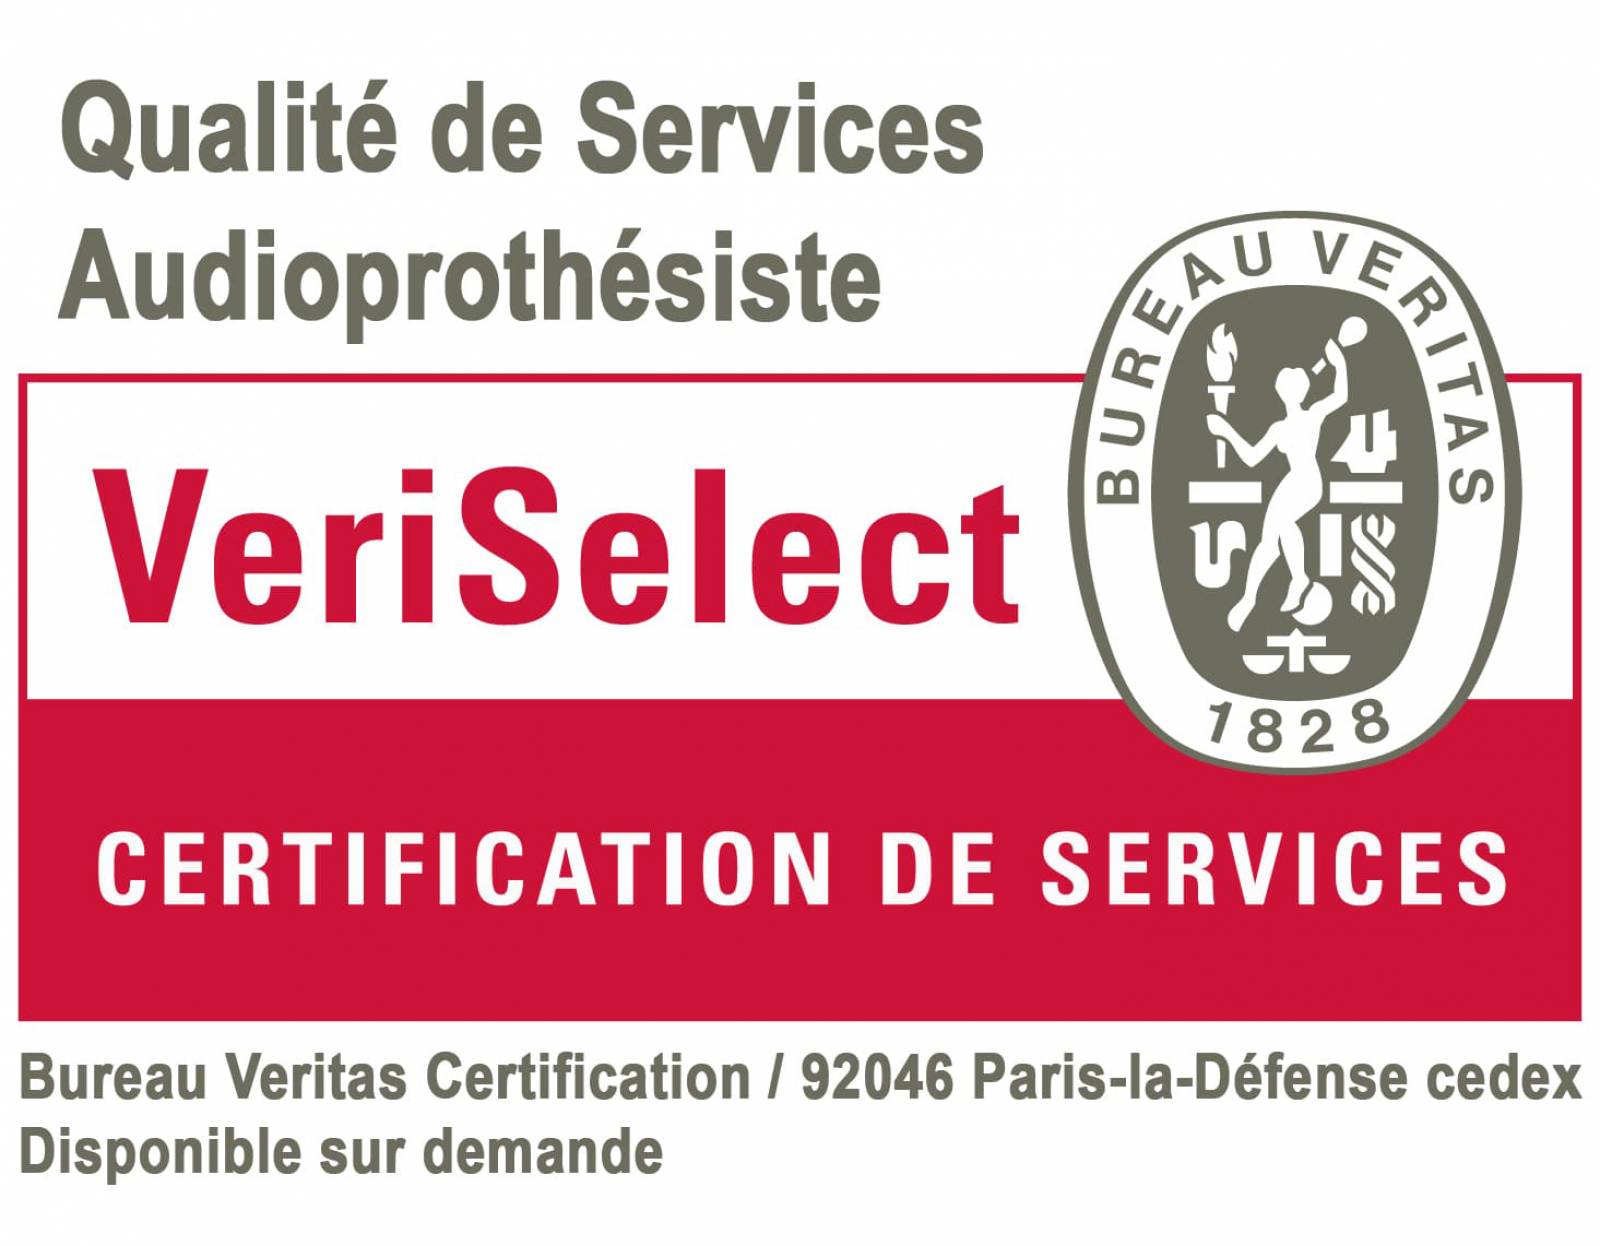 audioprothésiste Bordeaux certifié Veriselect Veritas